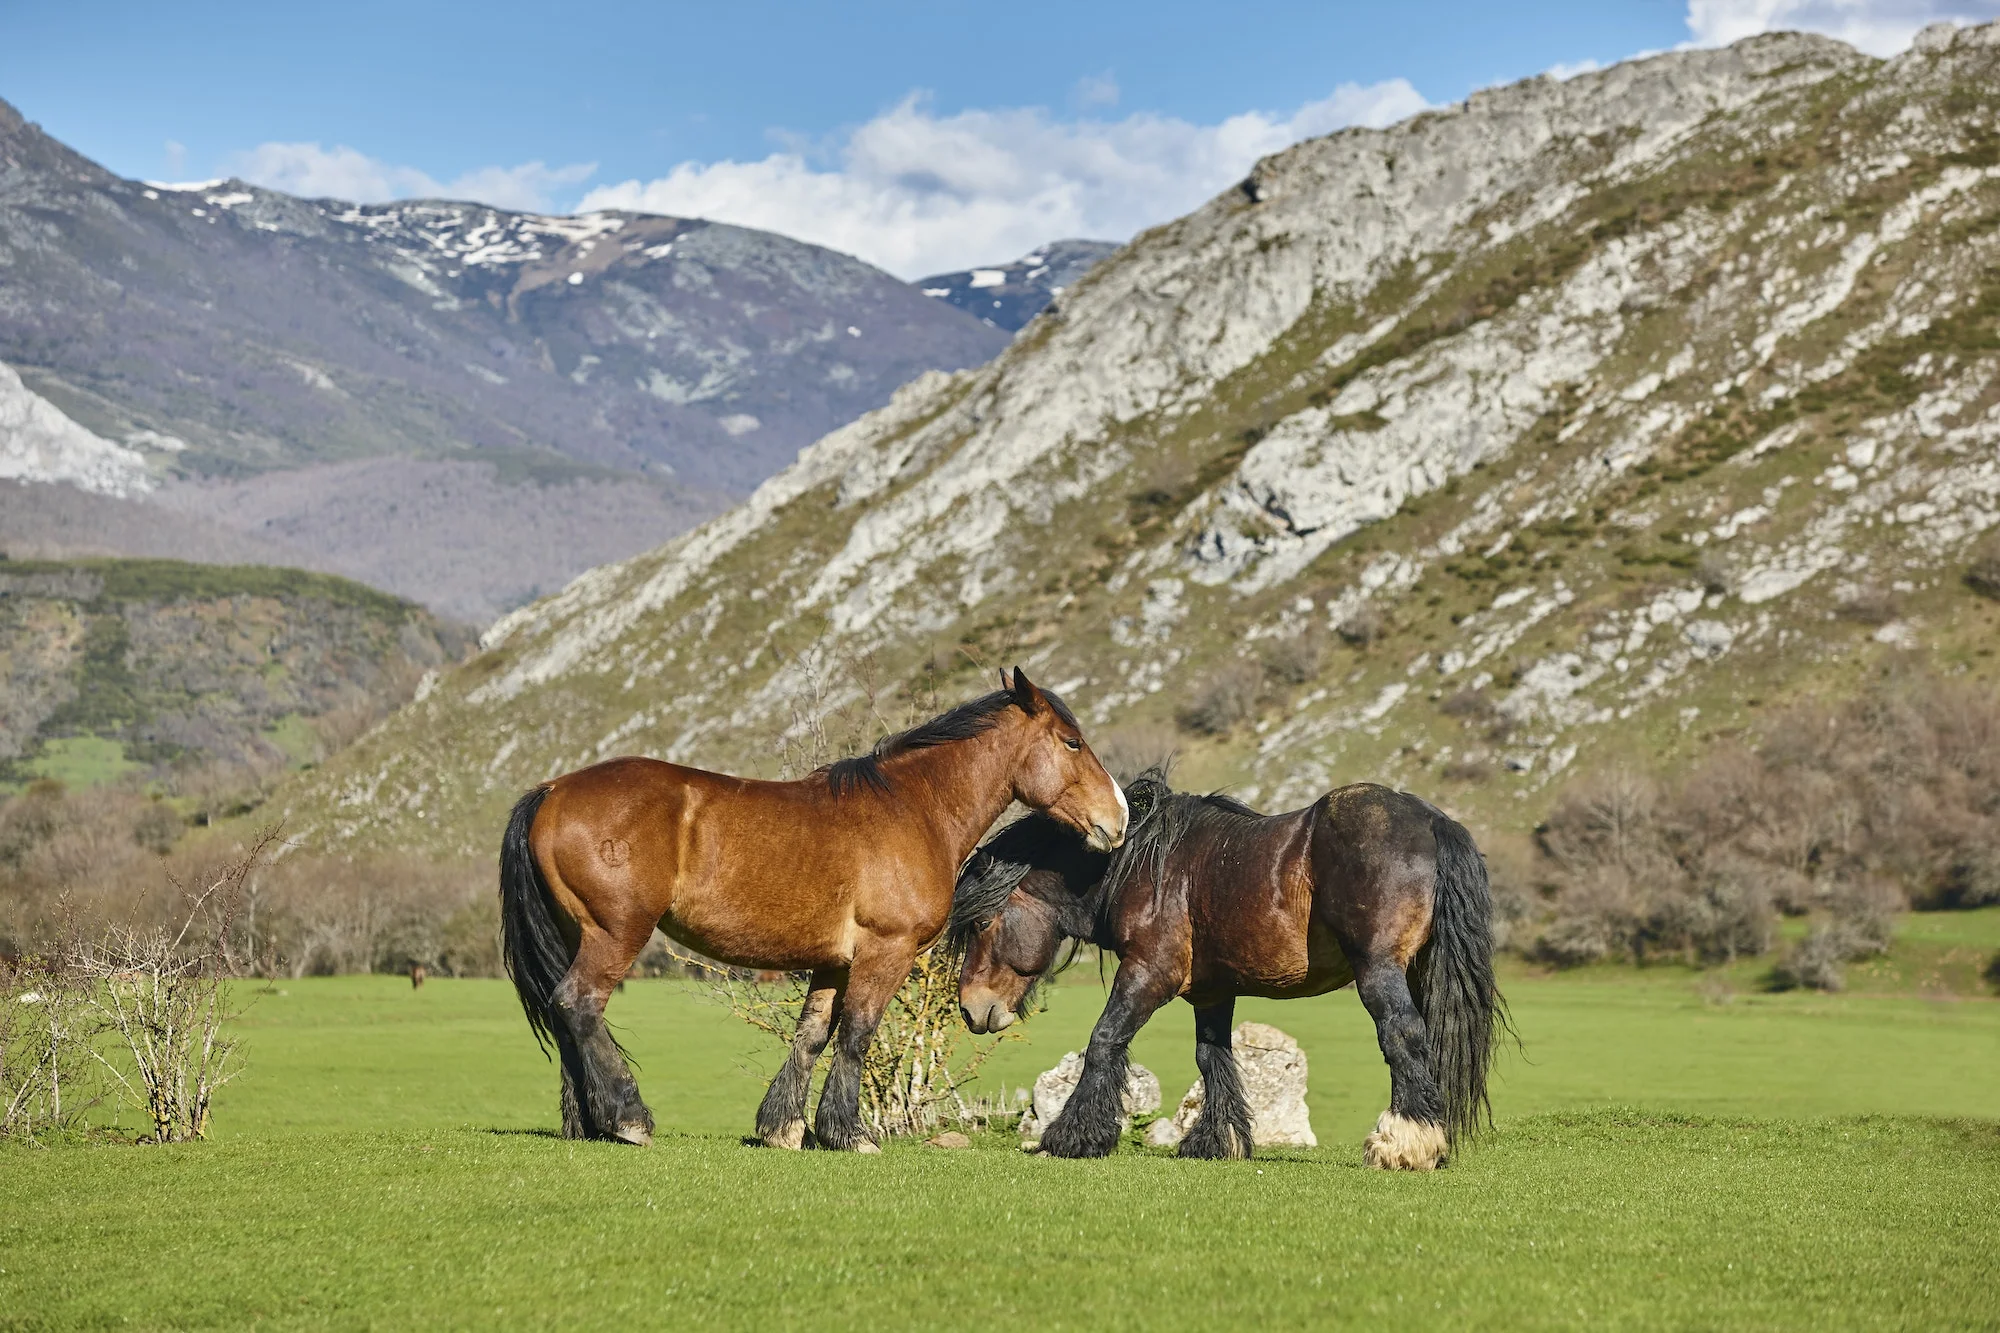 Horses in a green valley. Castilla y Leon landscape. Spain